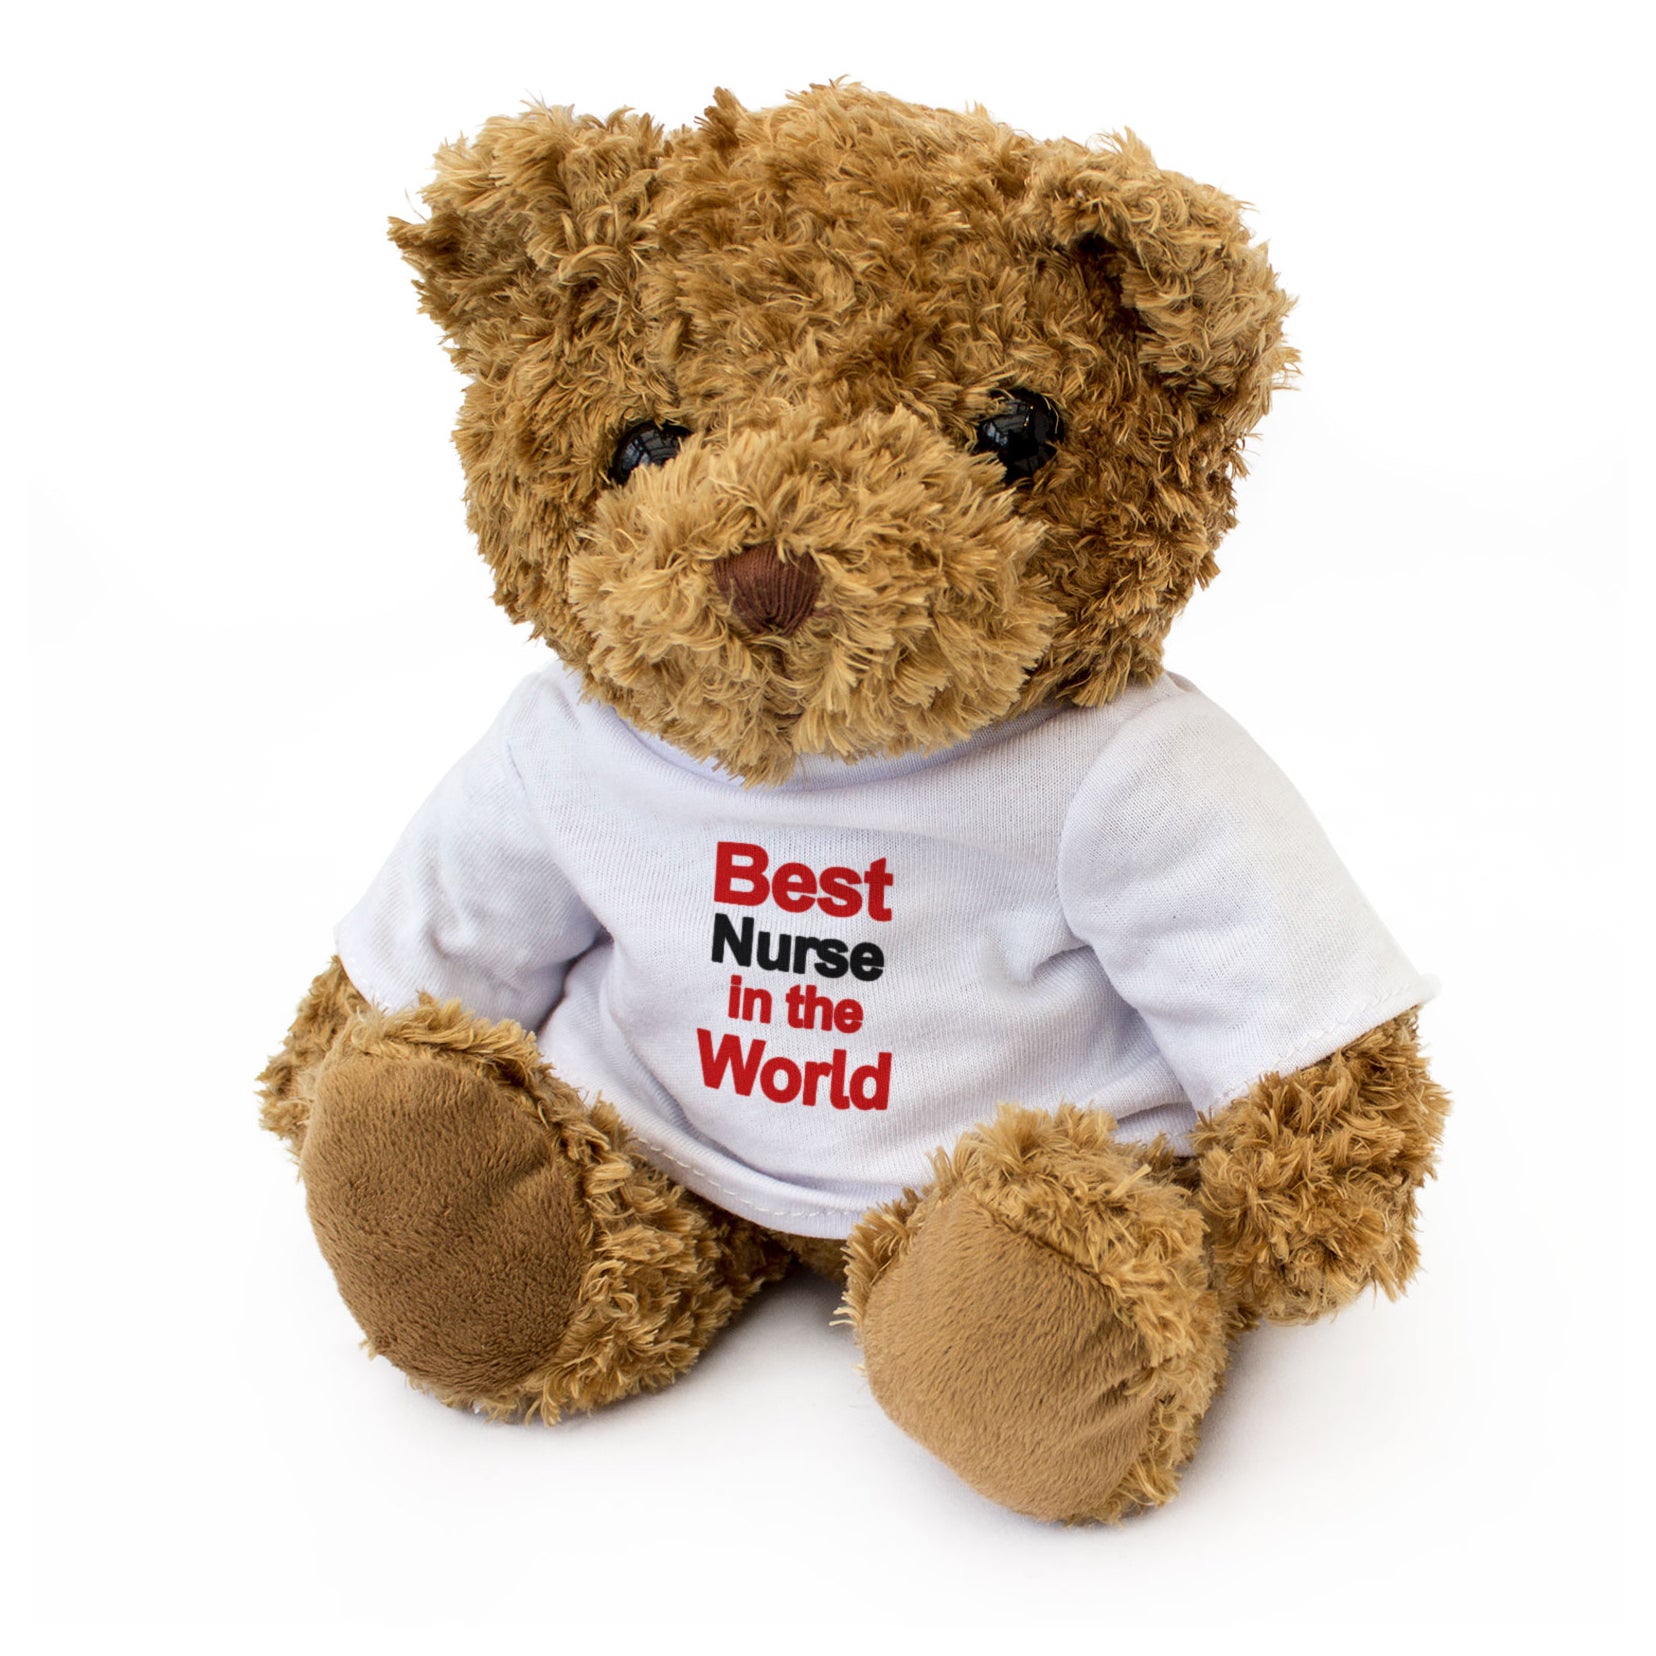 Best Nurse In The World Teddy Bear - Gift Present